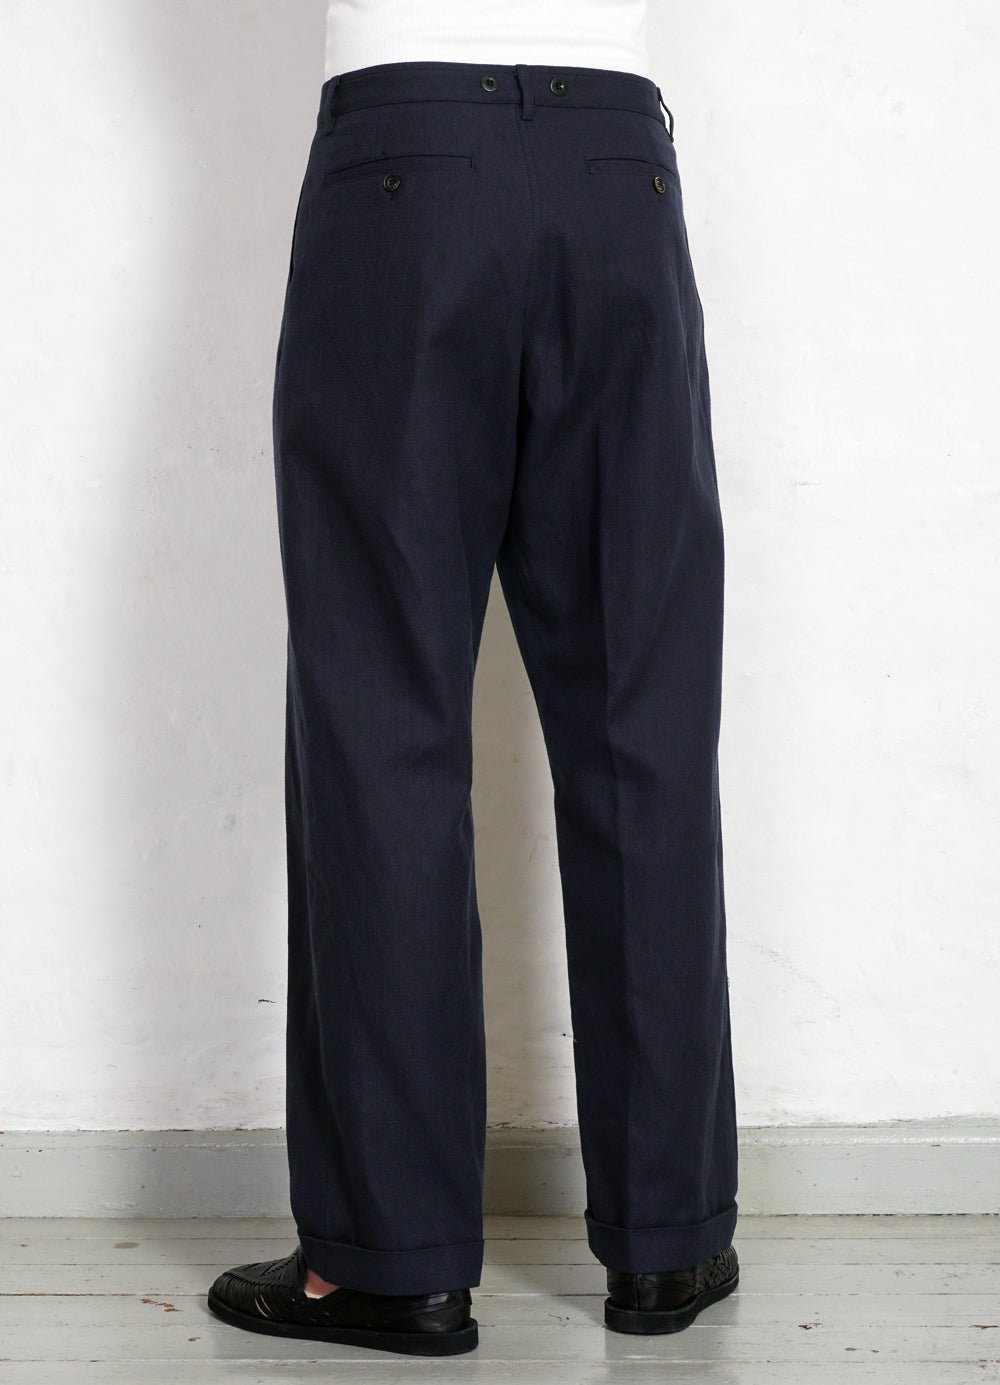 HANSEN GARMENTS - SUNE | Pleated Wide Cut Trousers | Dark Blue - HANSEN Garments